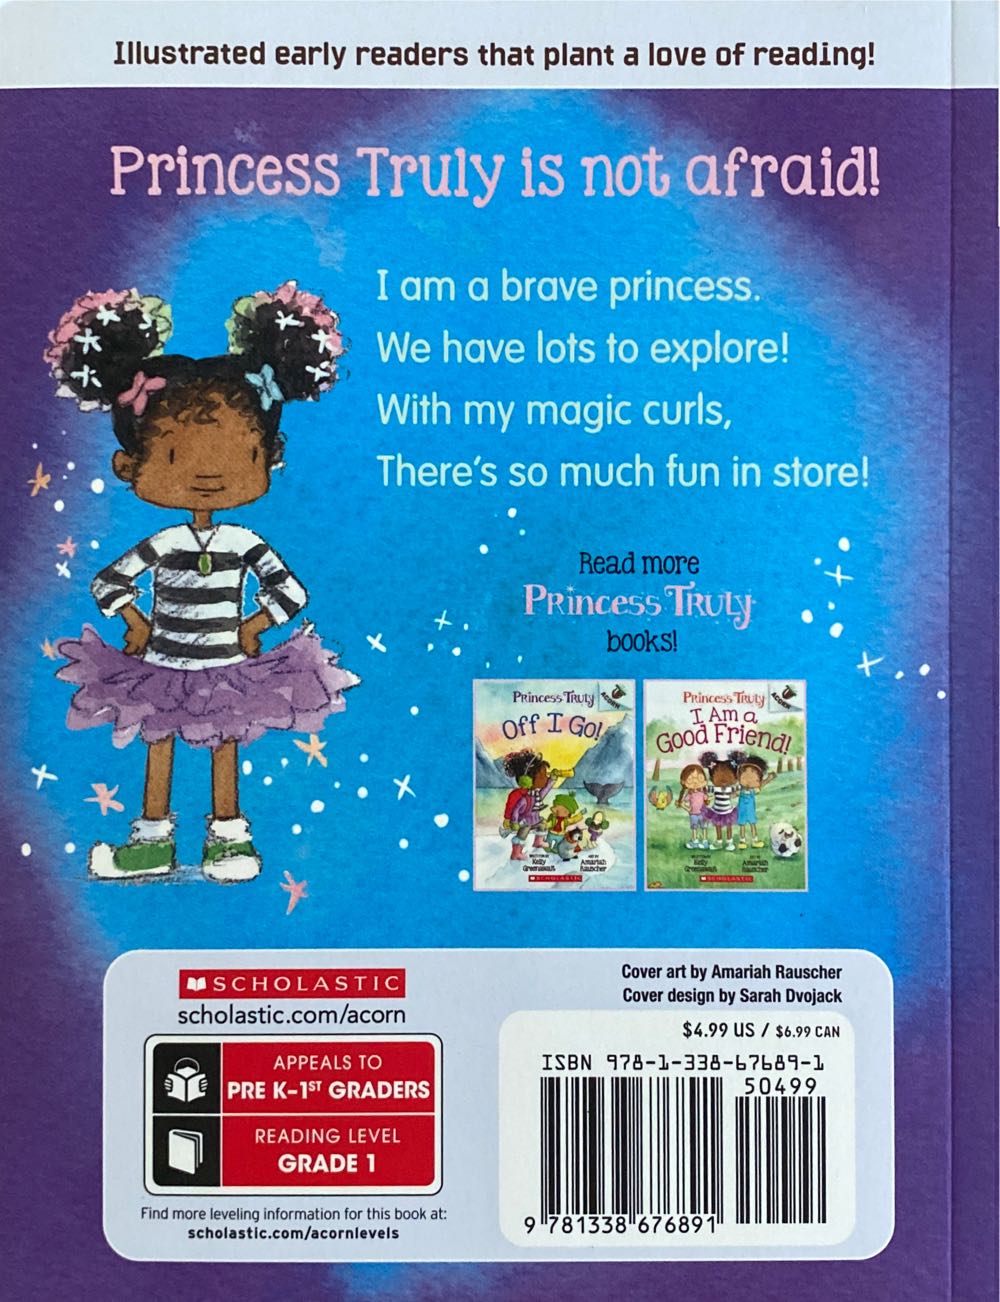 I Am Brave! - Kelly Greenawalt (Princess Truly - Paperback) book collectible [Barcode 9781338676891] - Main Image 2